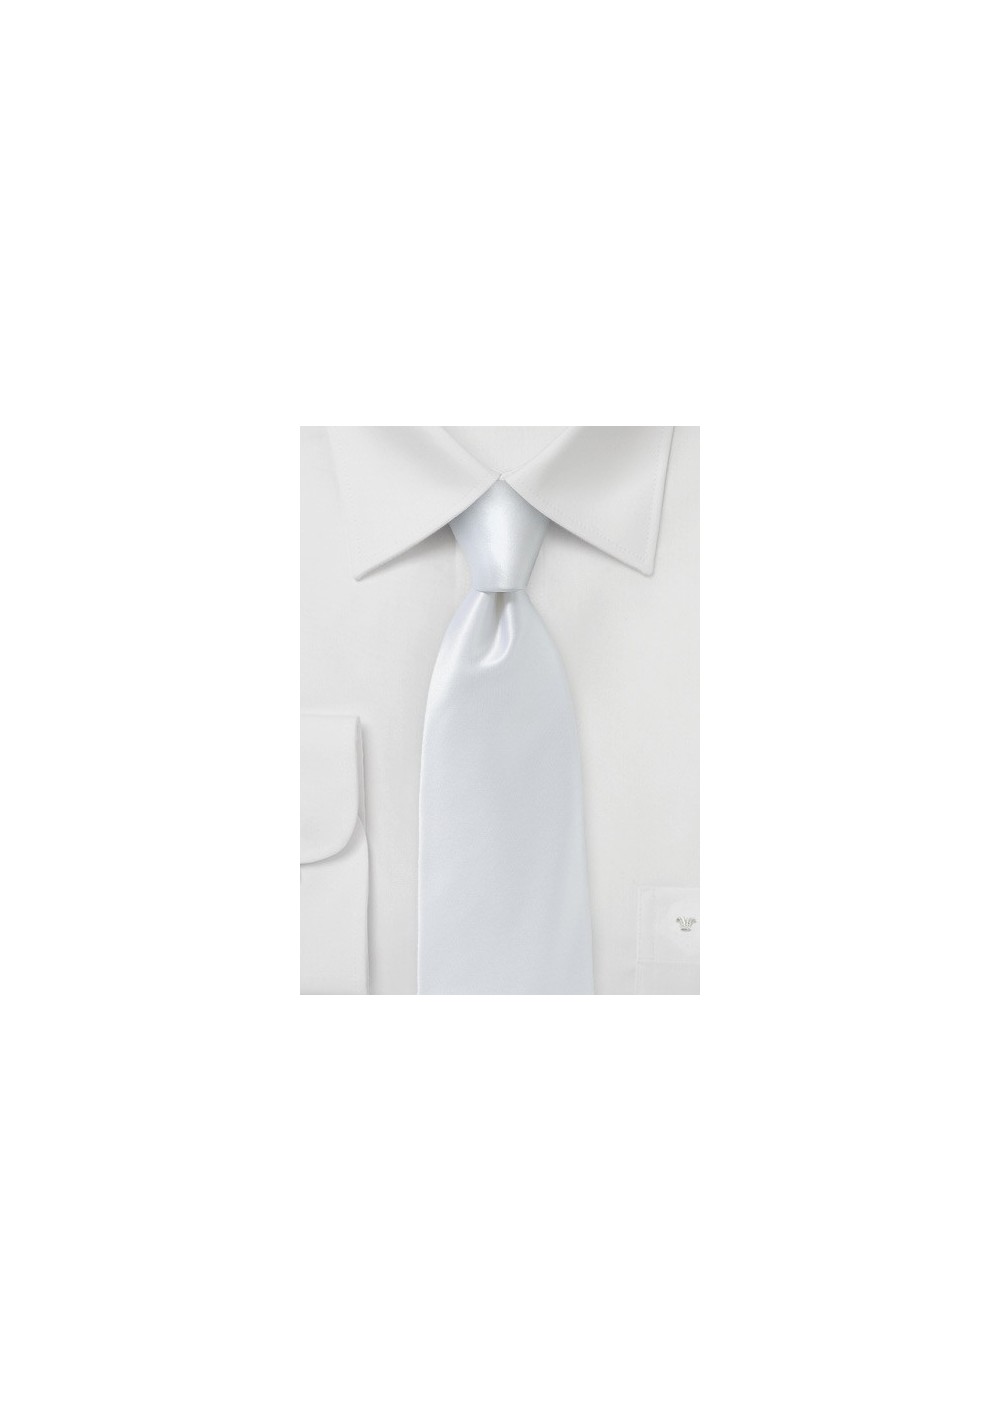 Solid White Silk Tie in Modern Narrow Width